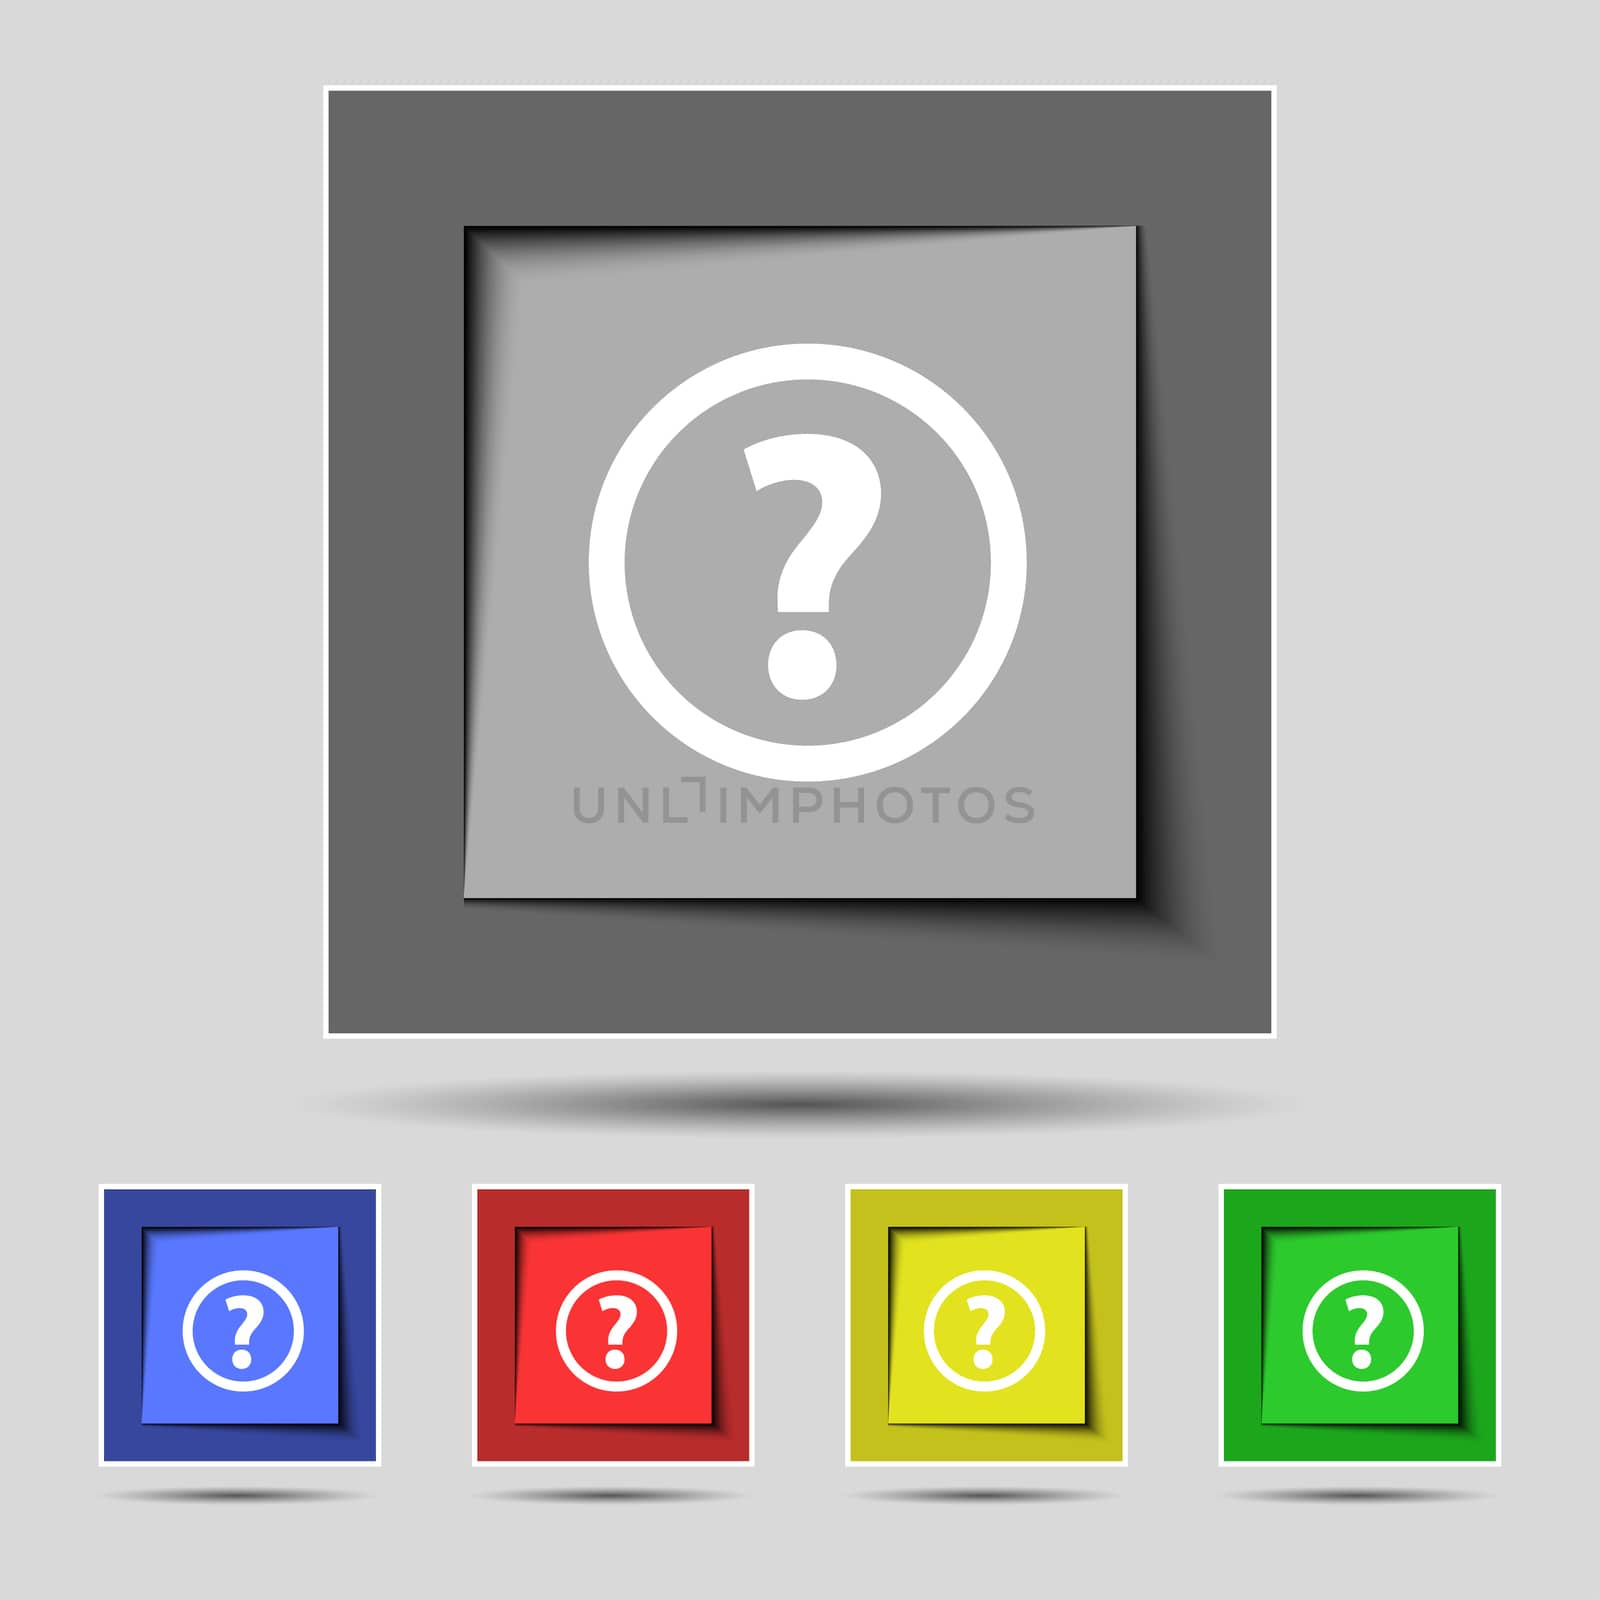 Question mark sign icon. Help speech bubble symbol. FAQ sign Set colour buttons illustration